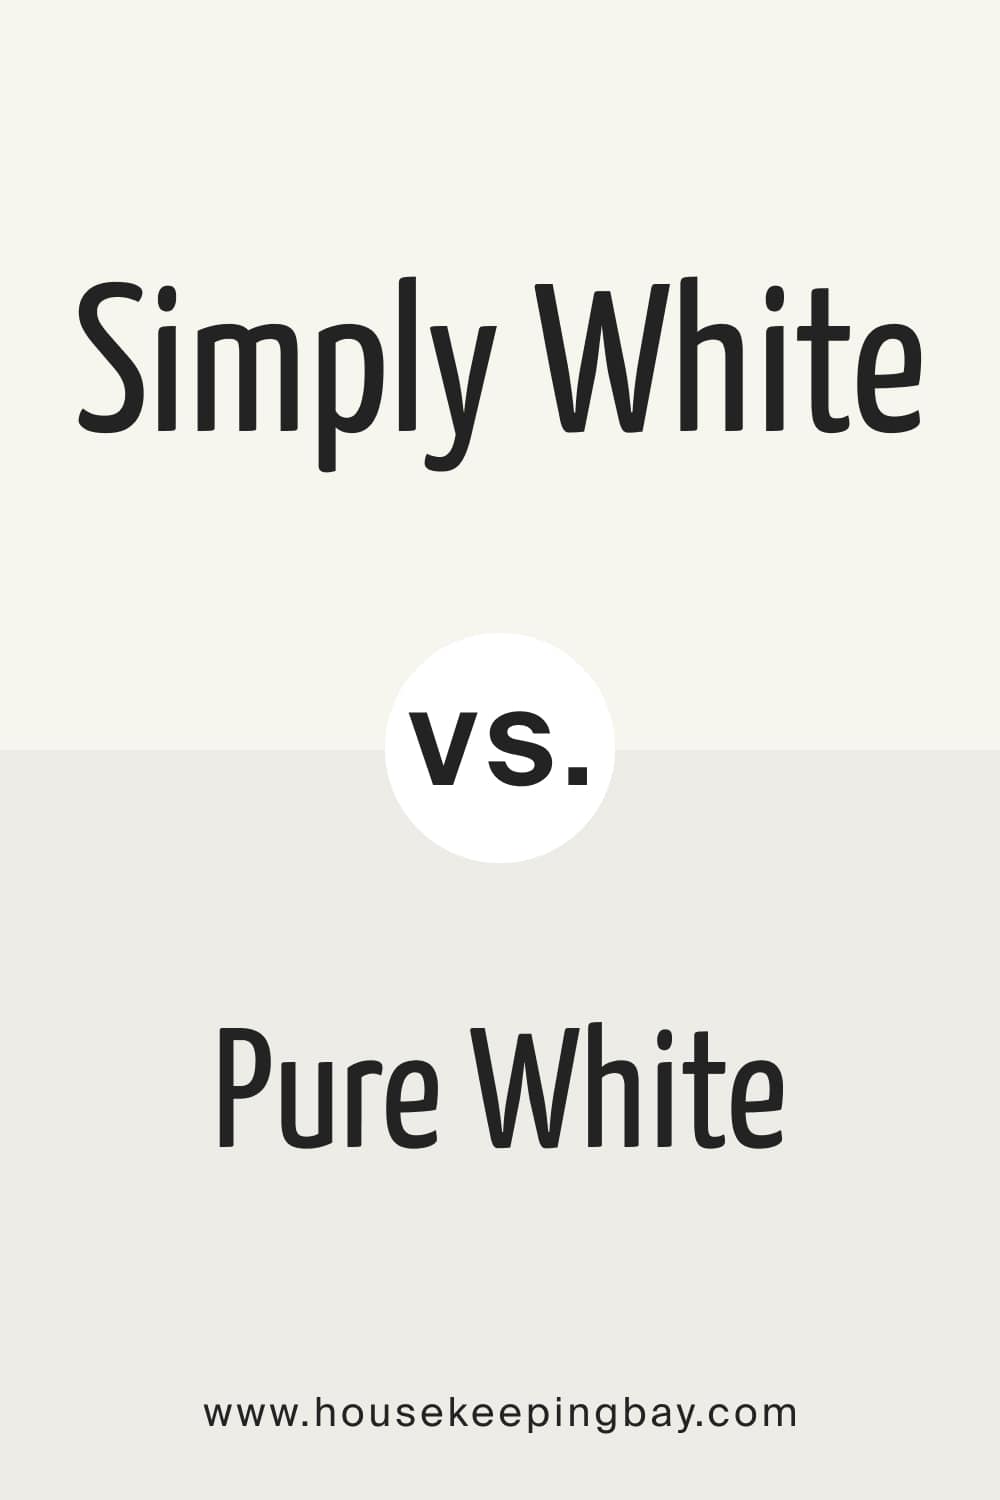 Simply White vs. Pure White